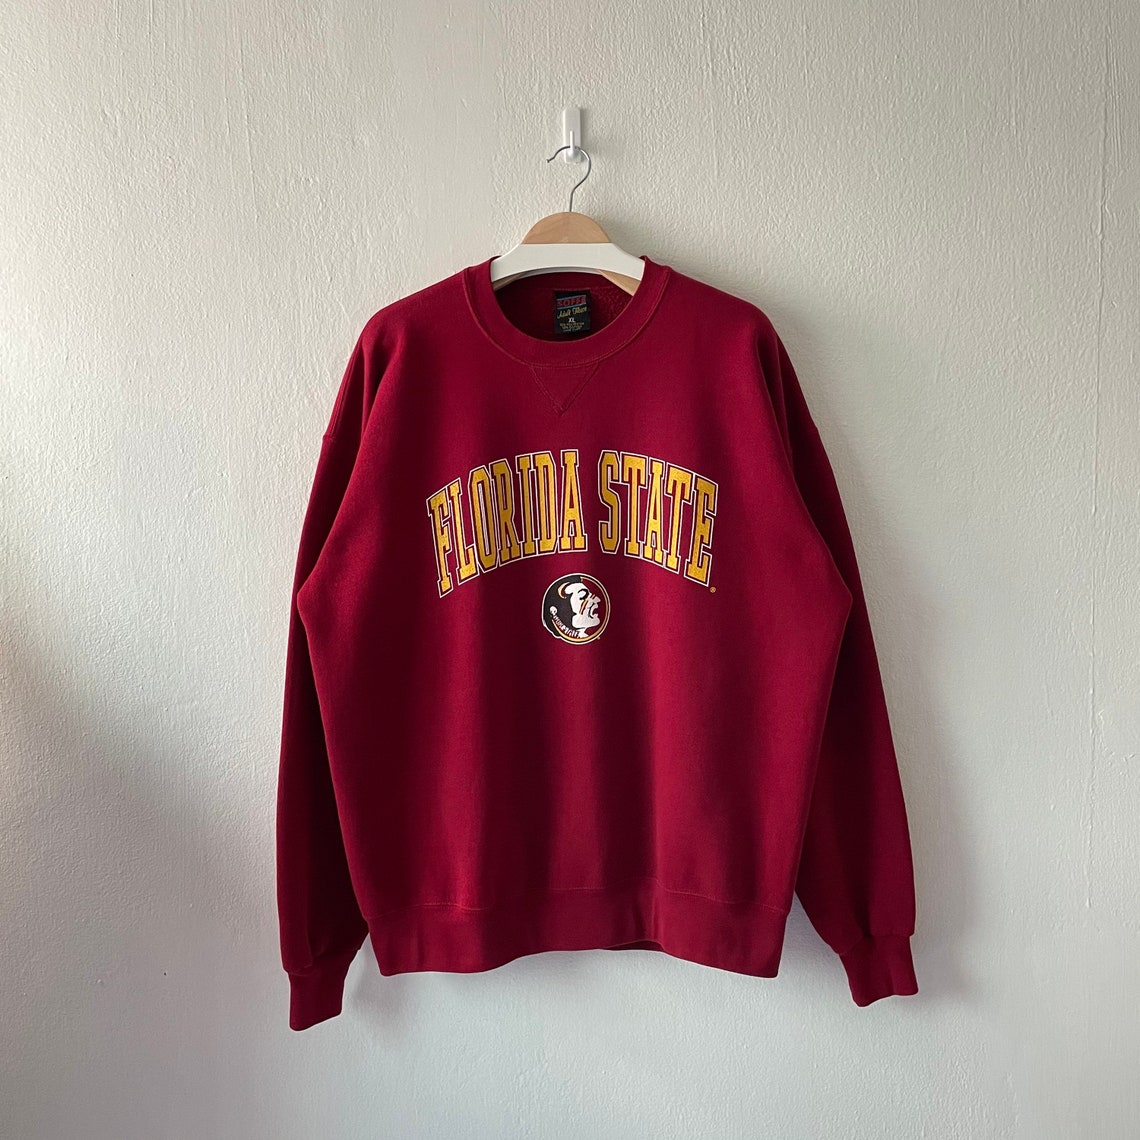 Vintage 90s University of Florida State Crewneck Sweatshirt | Etsy